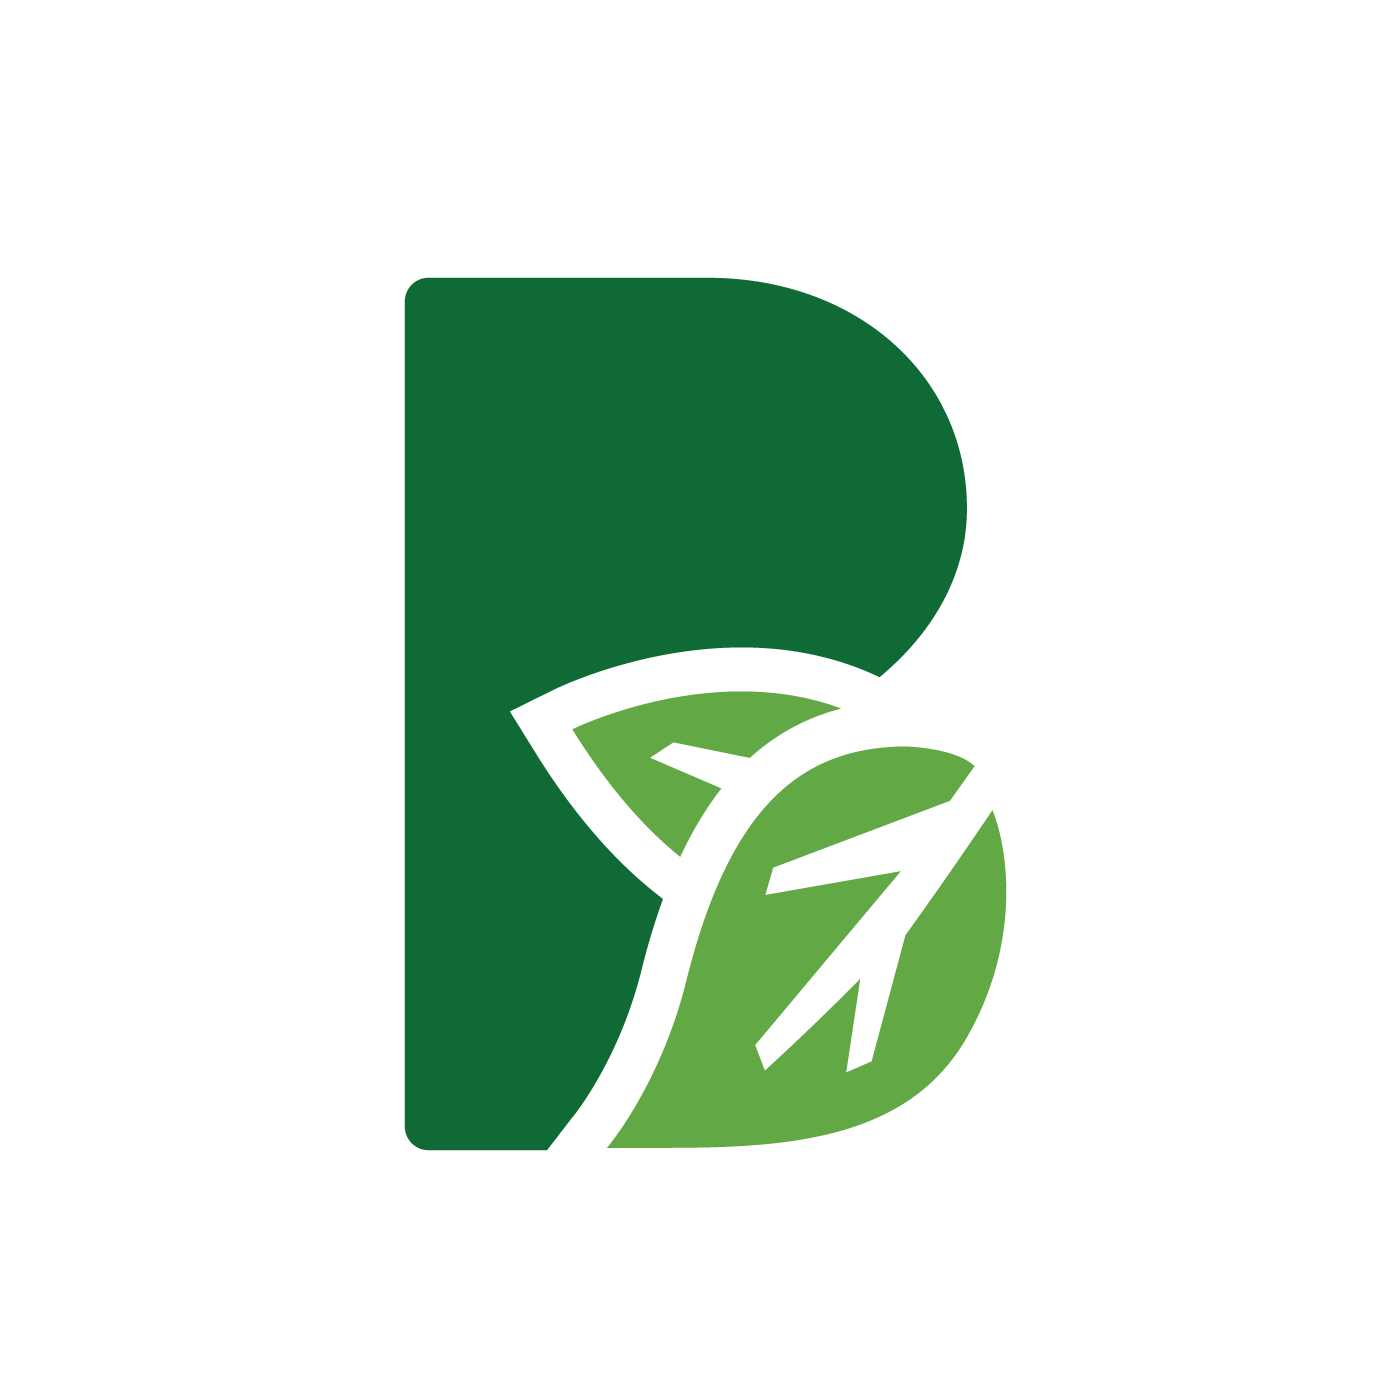 B icon green transparent